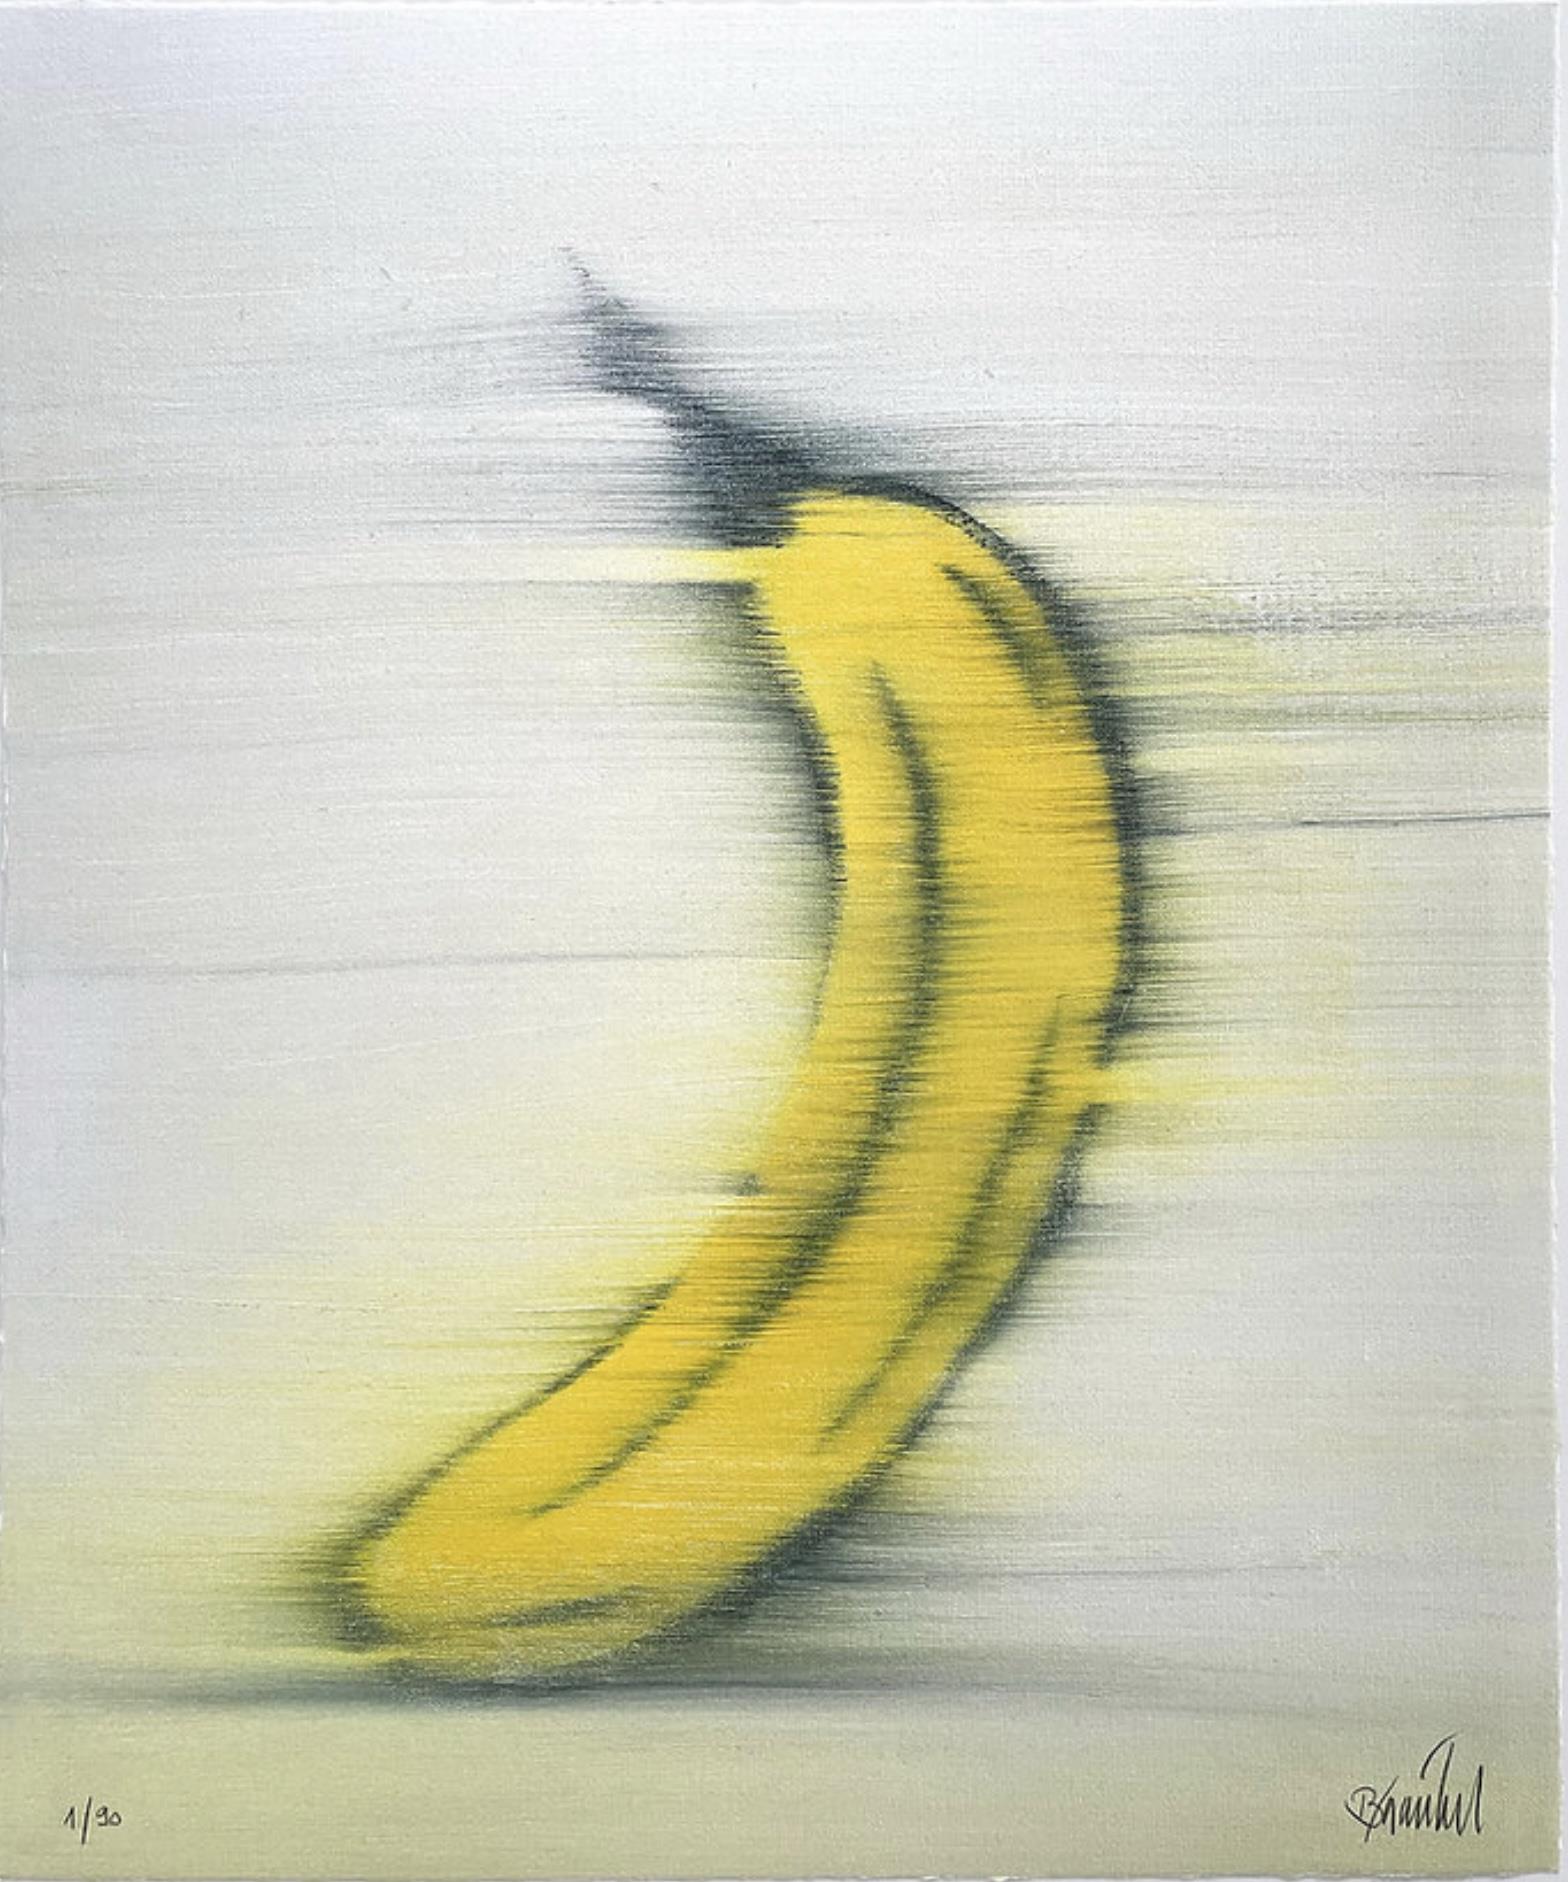 Richter-Banane - Baumgärtel, Thomas - k-2203Bt4